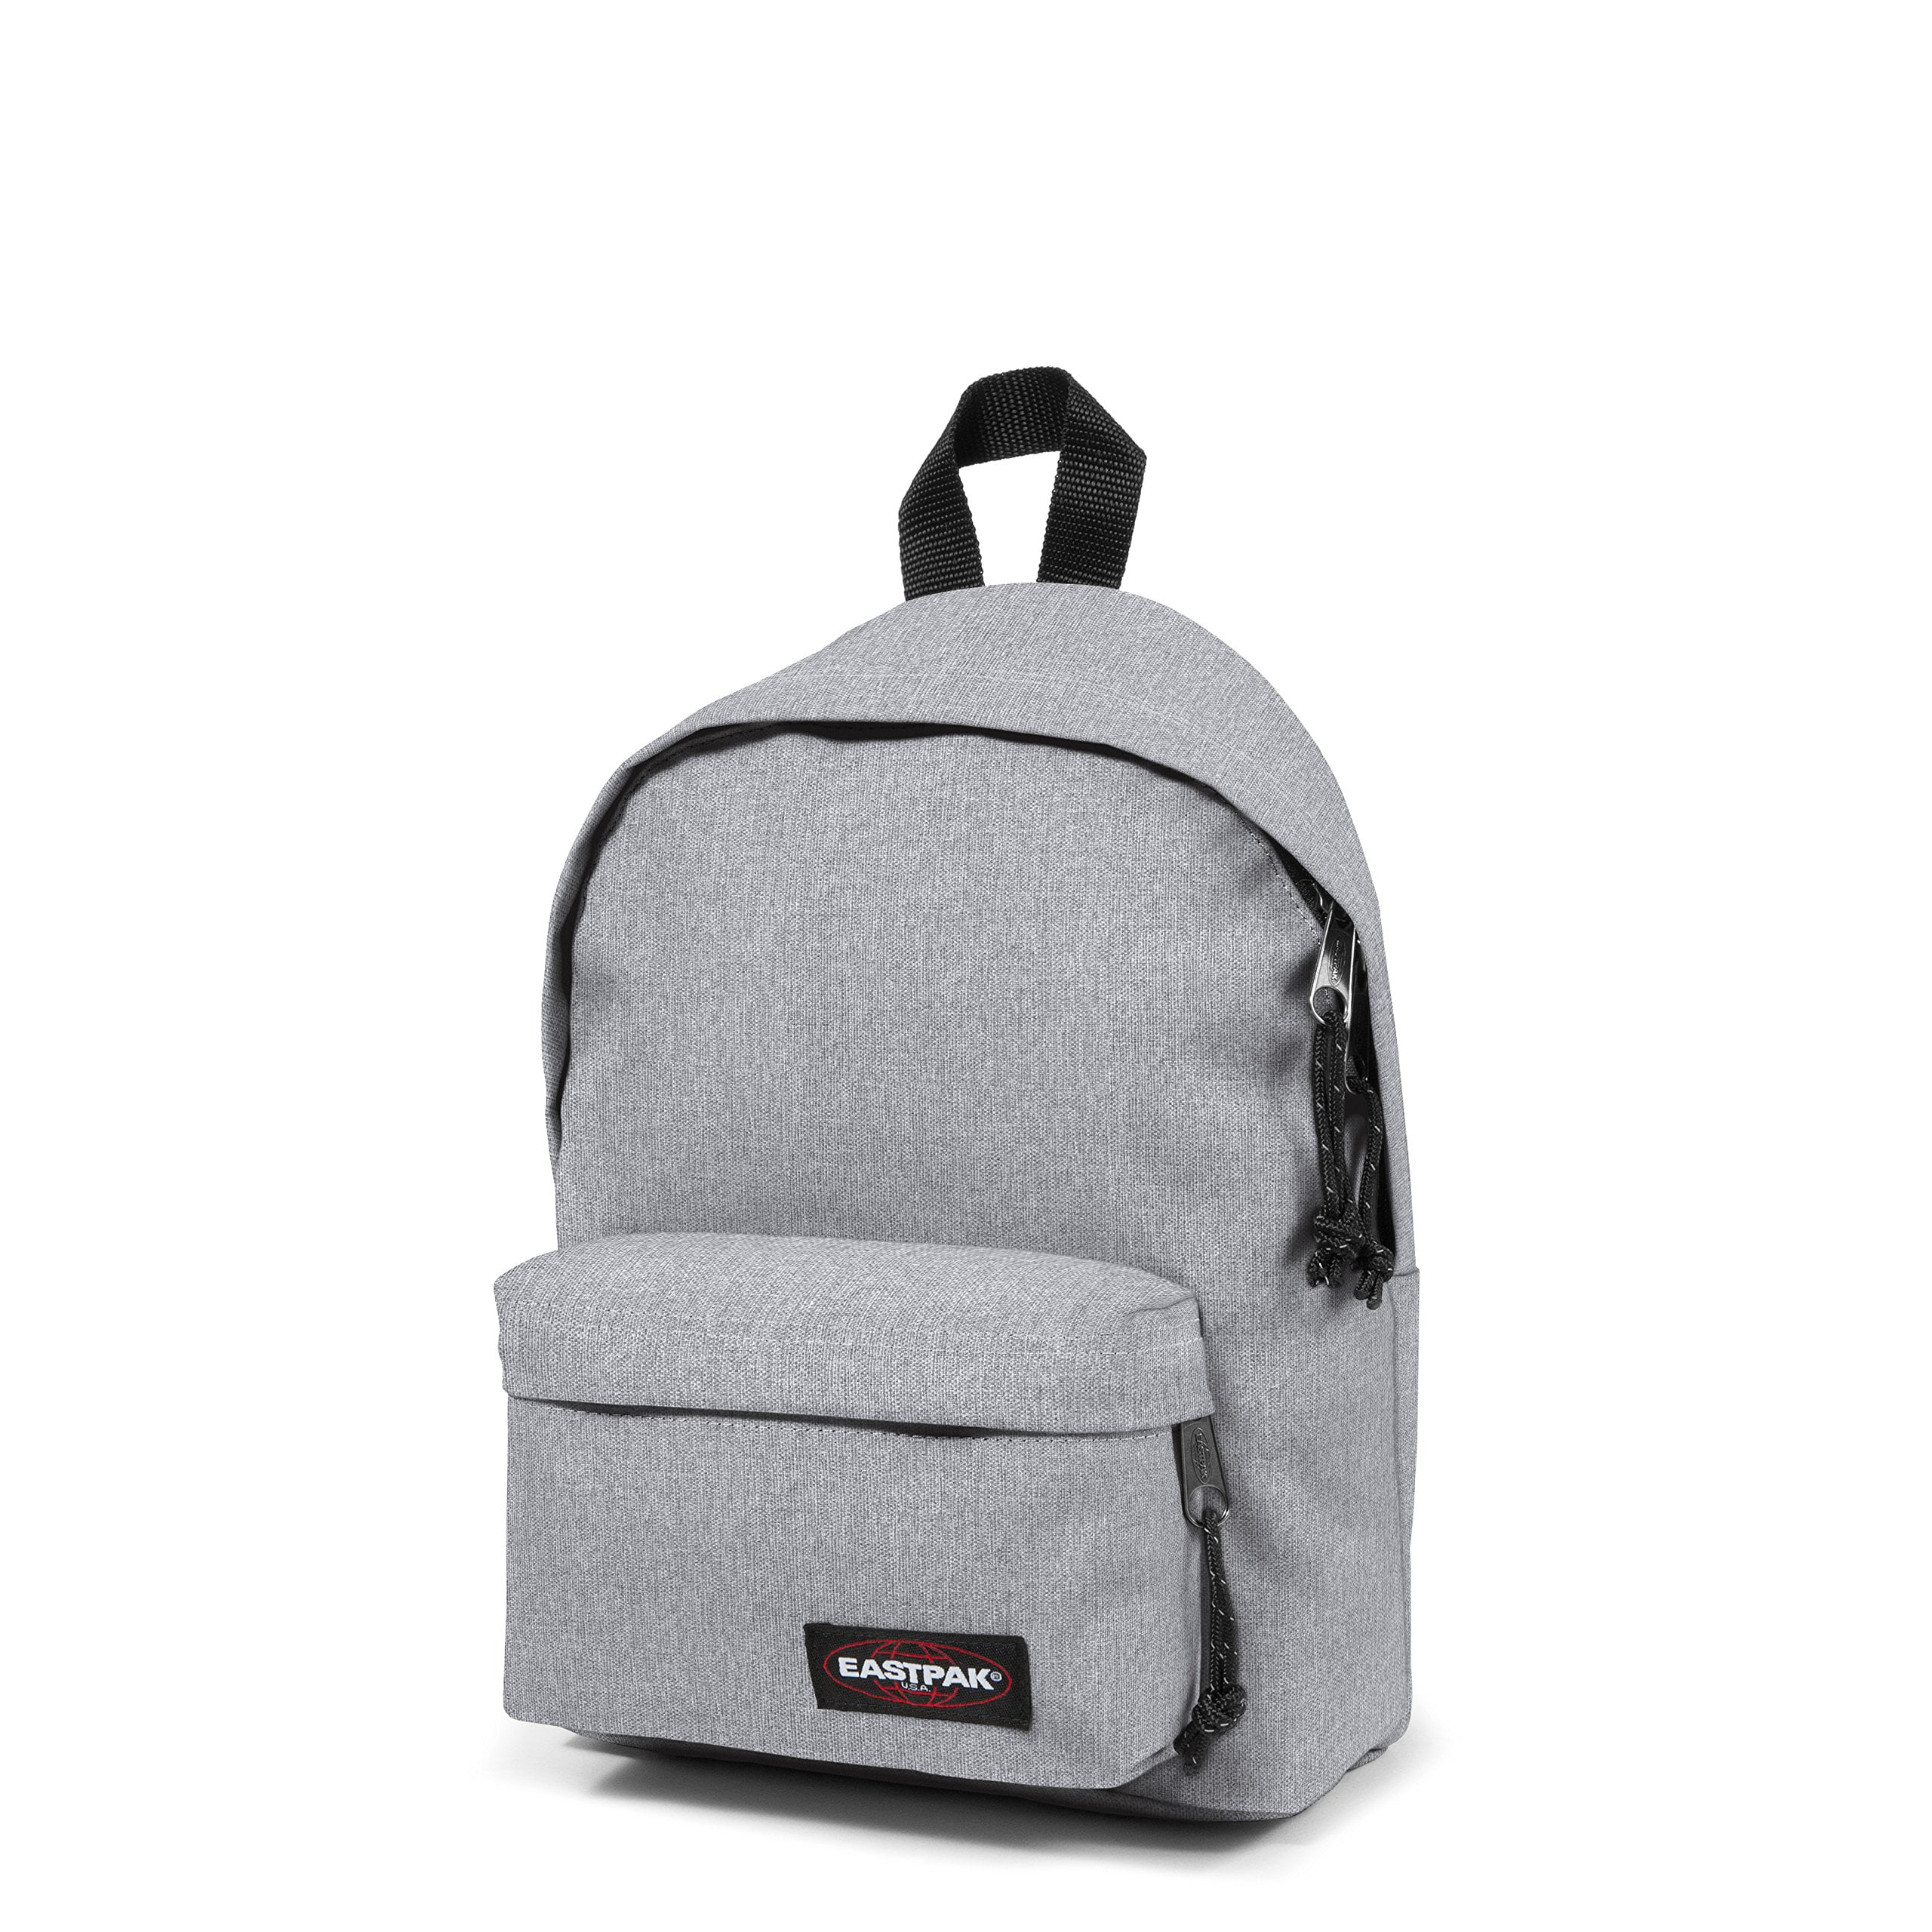 Verfrissend George Hanbury flexibel Eastpak Orbit XS Backpack (Sunday Grey) - Walmart.com